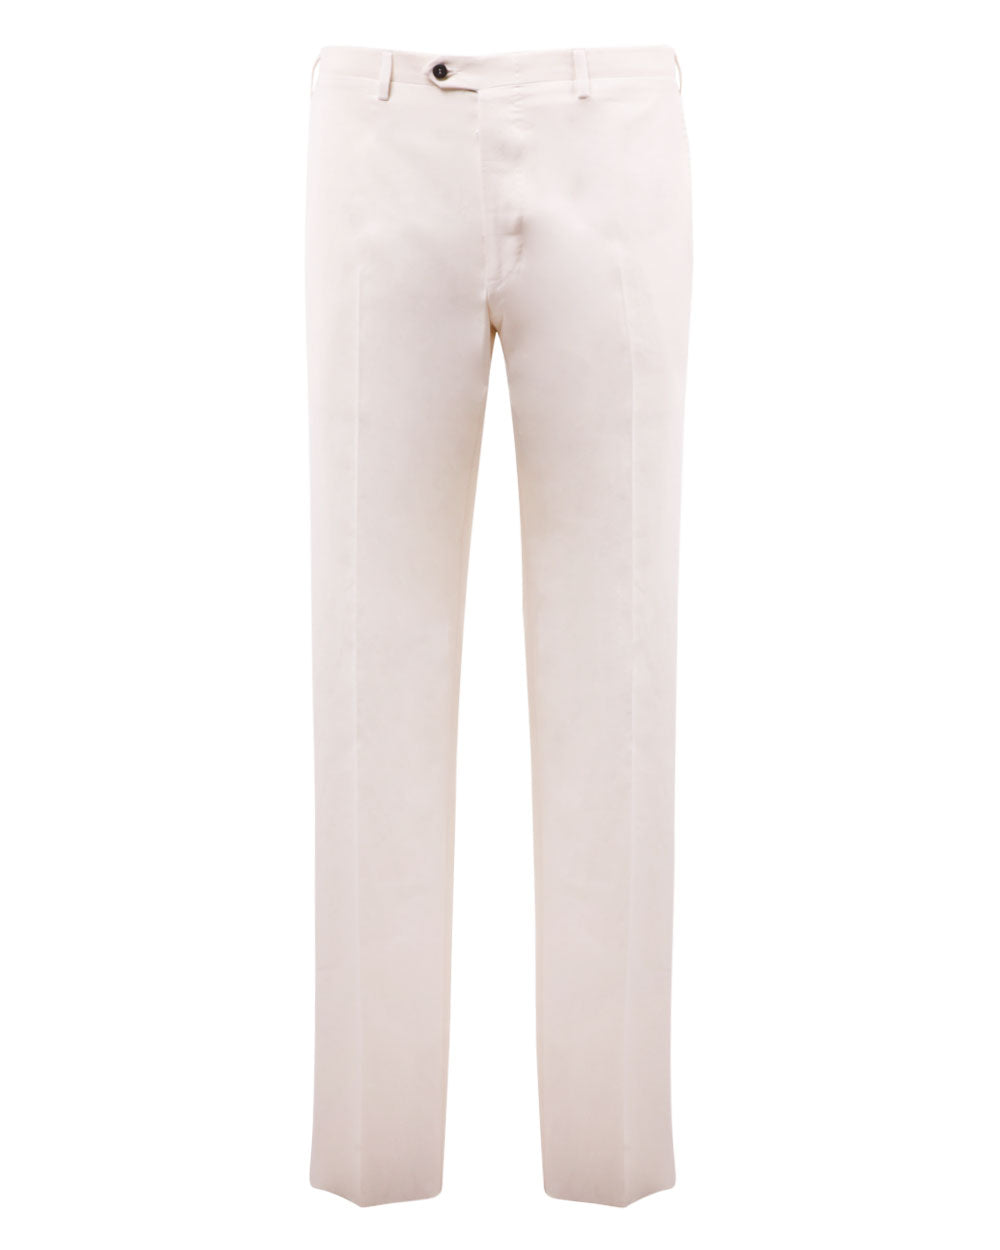 Light Khaki Cotton Quarter Top Pants